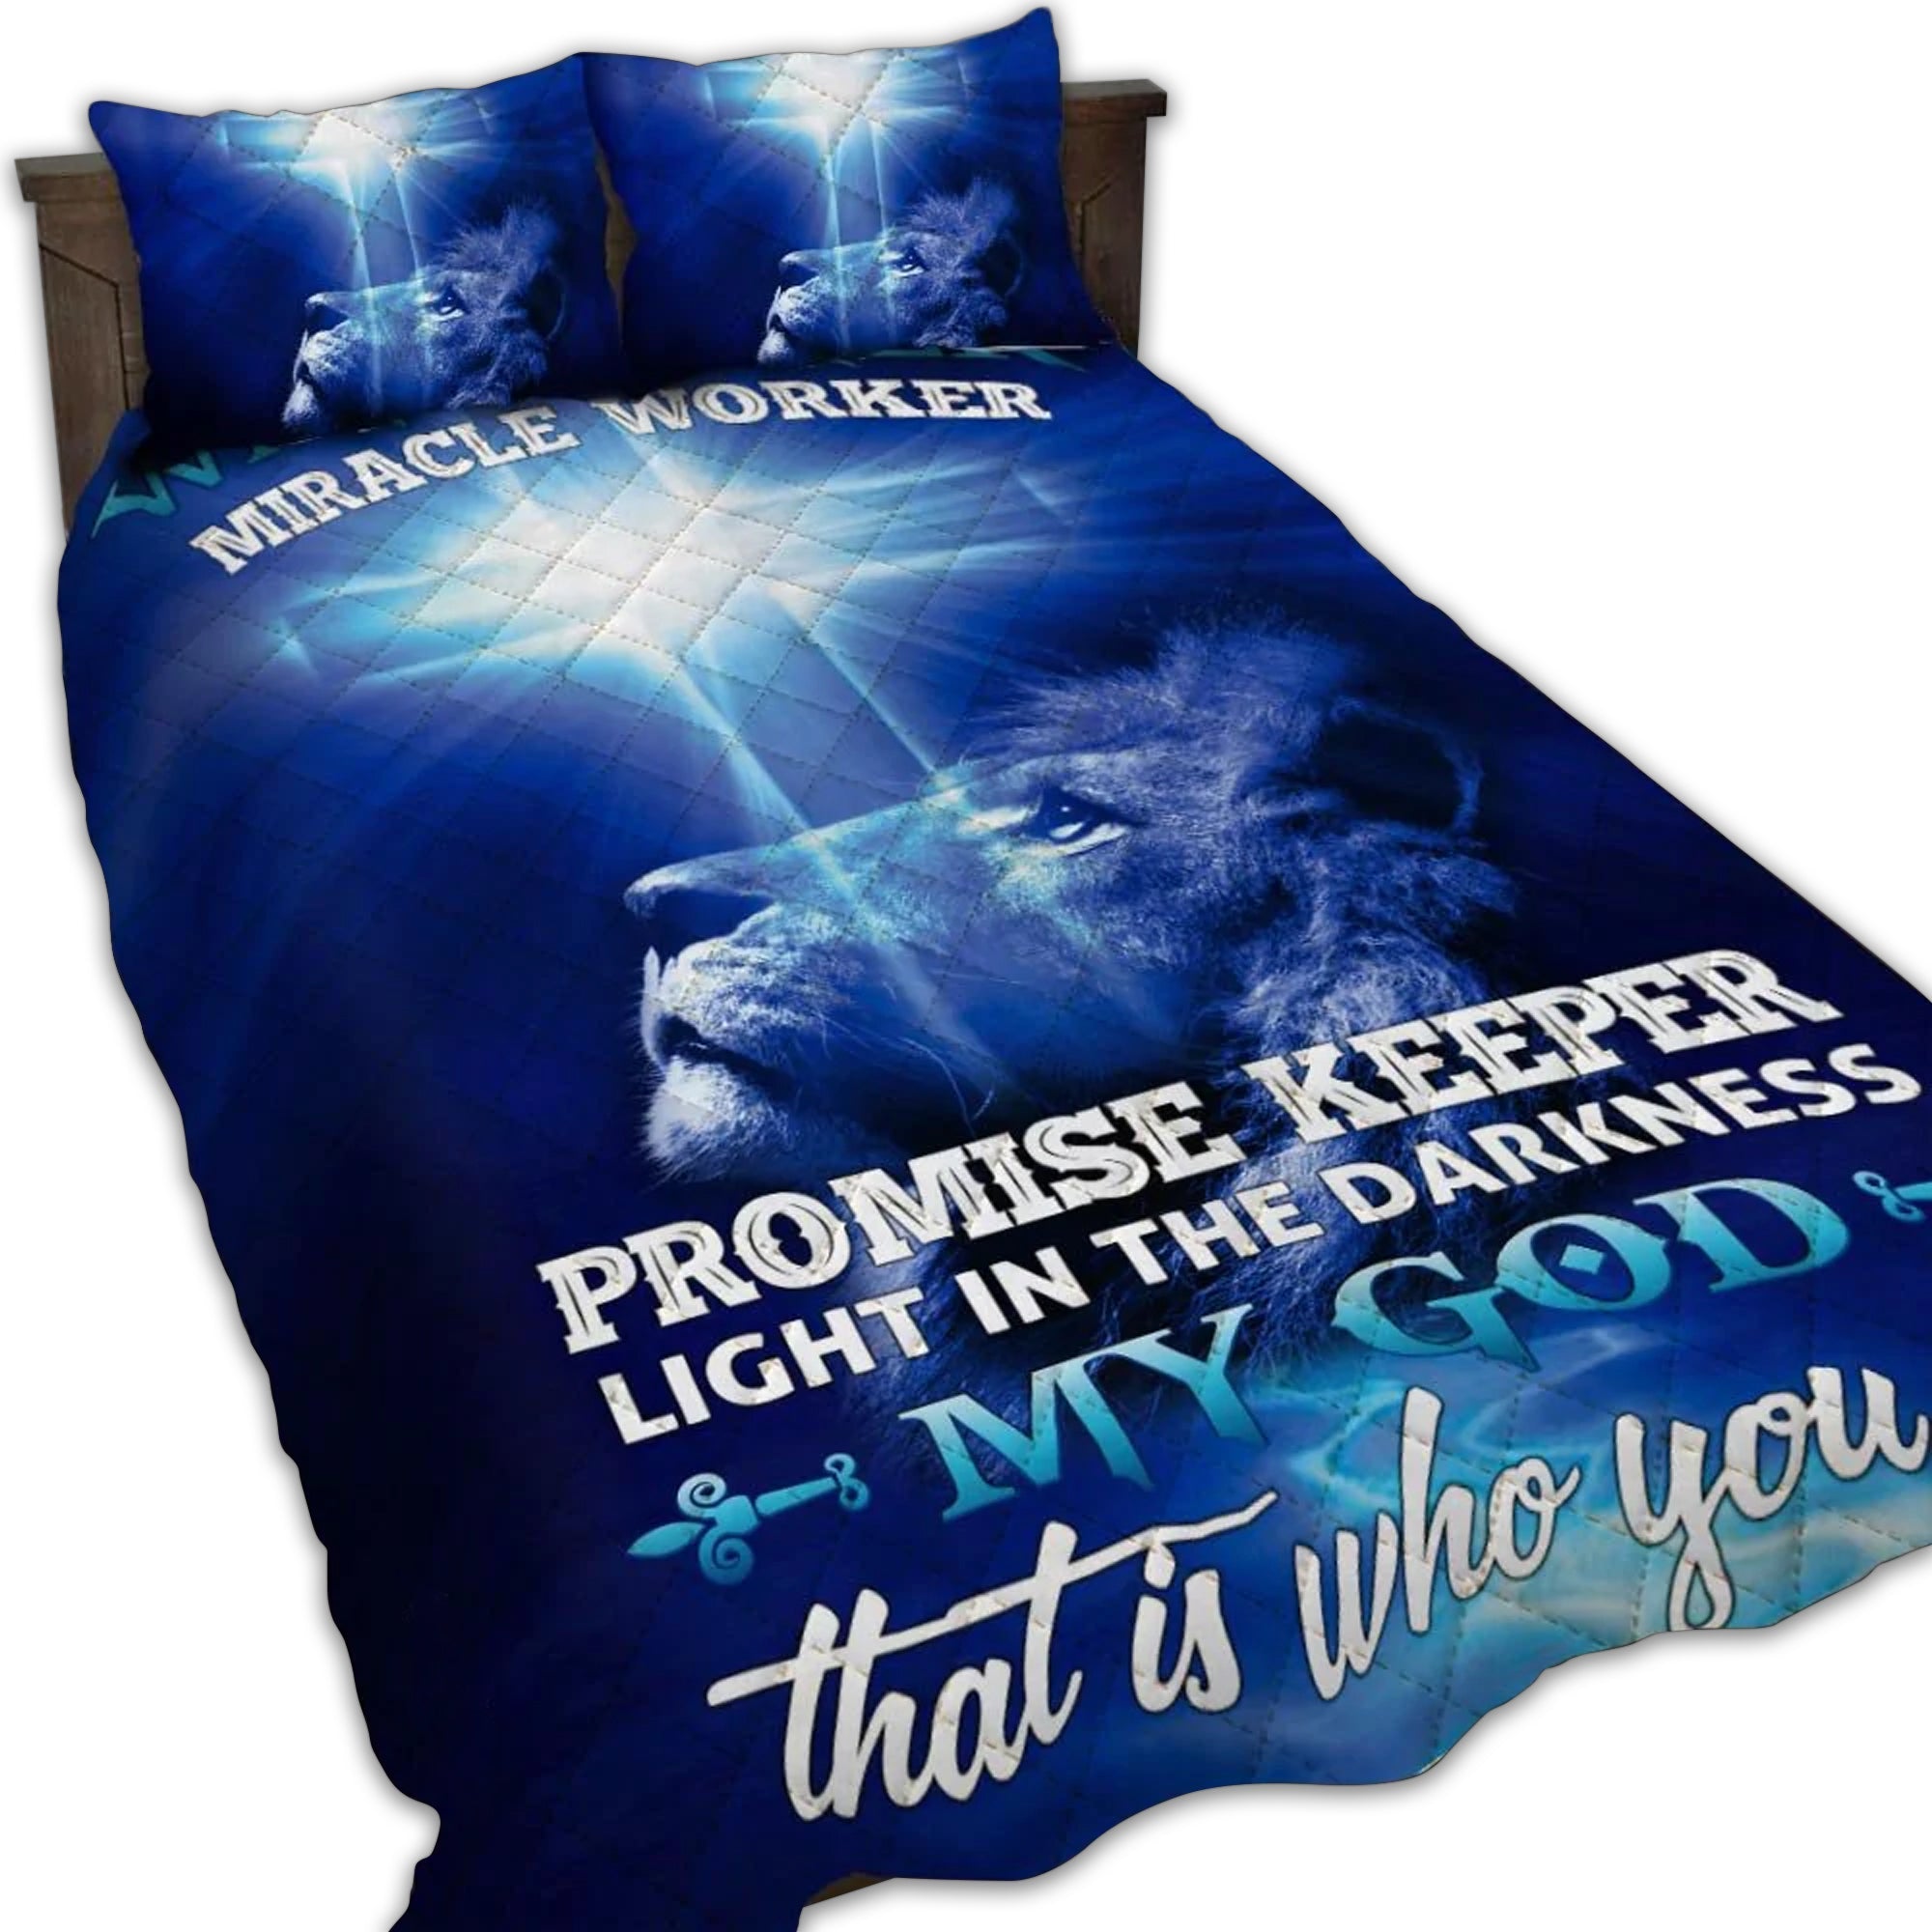 jesus-way-maker-miracle-worker-jesus-christ-lion-quilt-bed-set